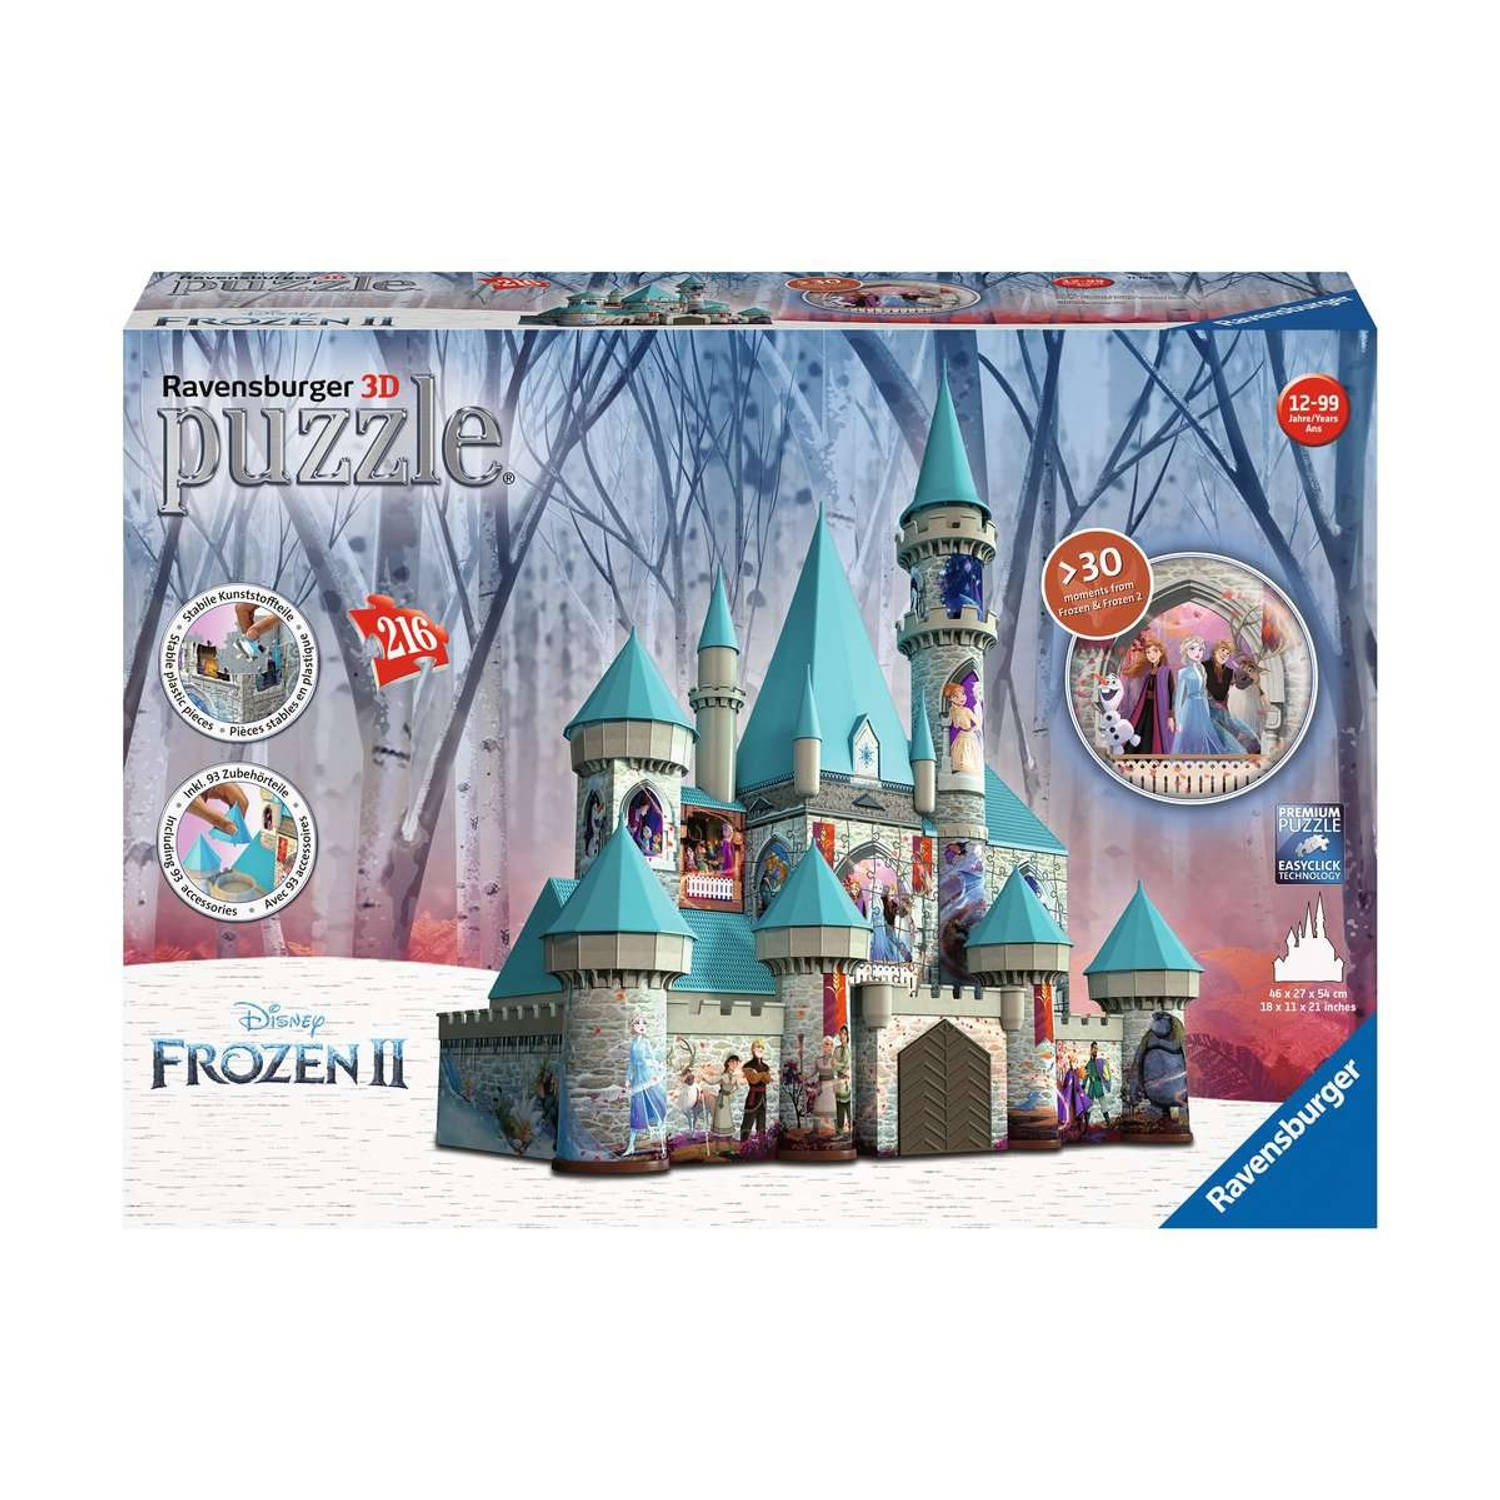 Ravensburger Frozen ll 3D puzzel kasteel